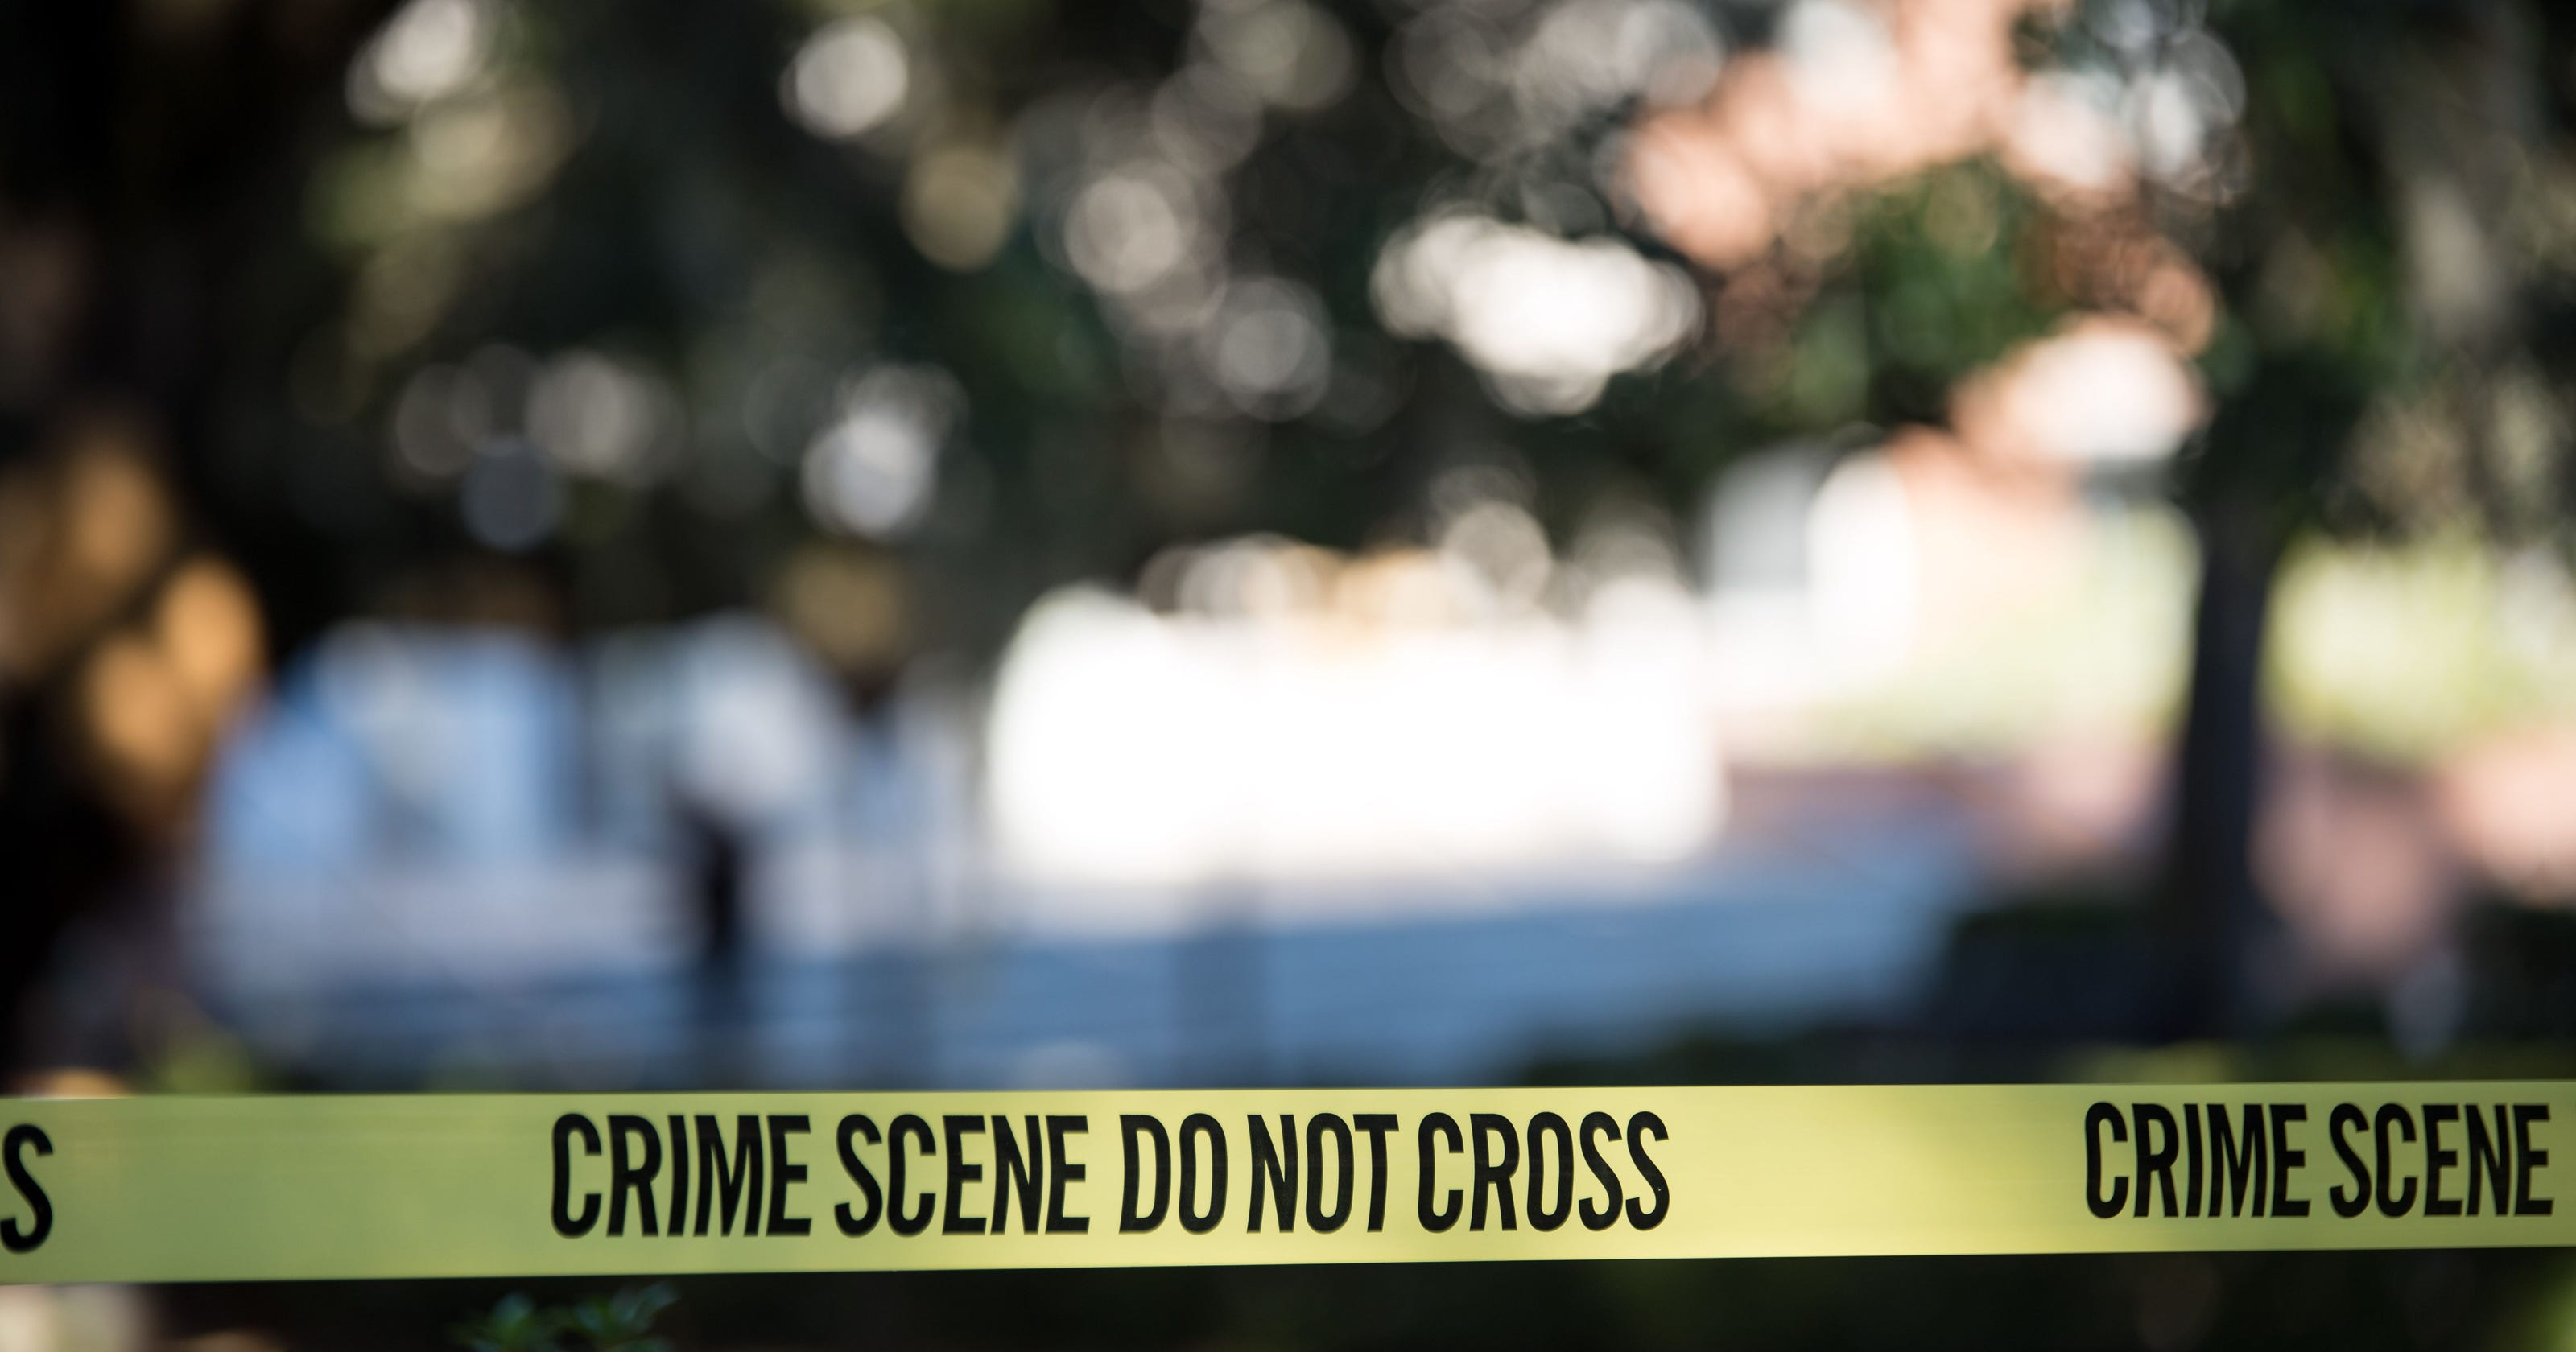 UPDATE: Birmingham homicide reclassified as justified death